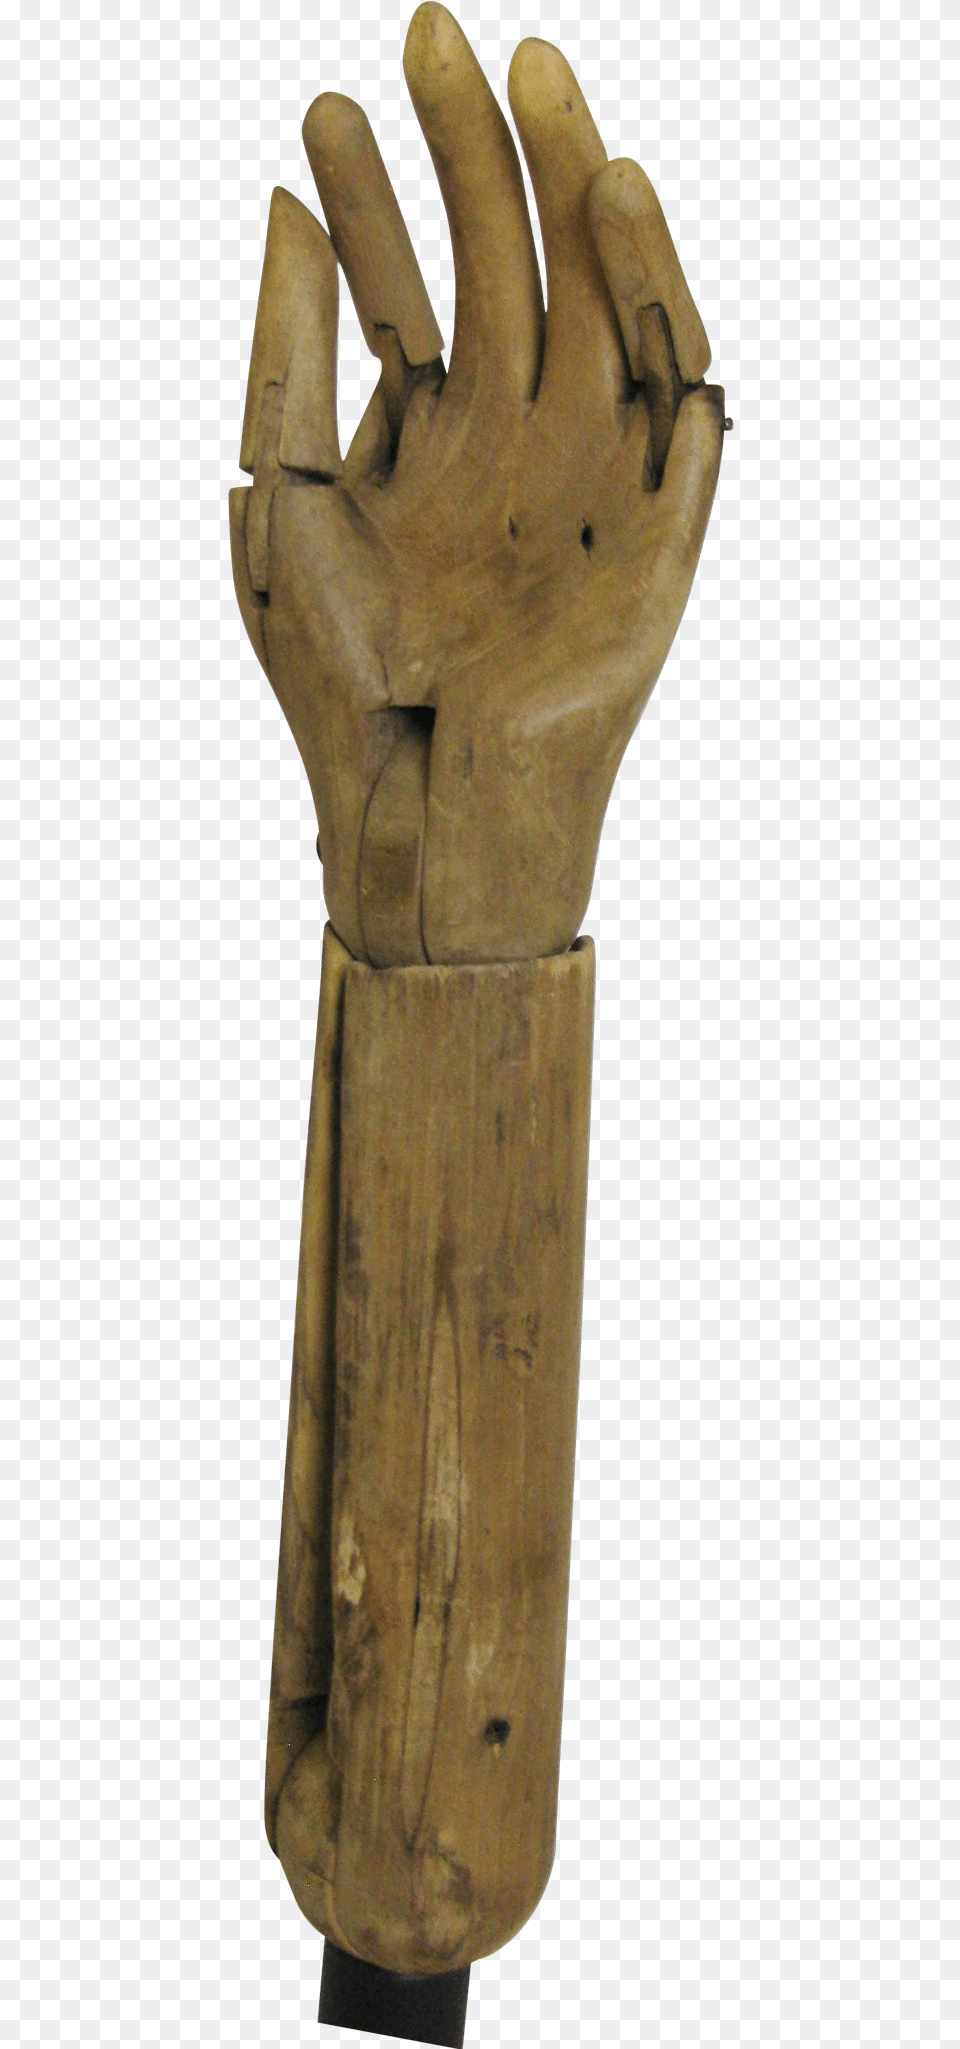 Vintage Wooden Mannequin Hand, Clothing, Glove, Baseball, Baseball Glove Png Image